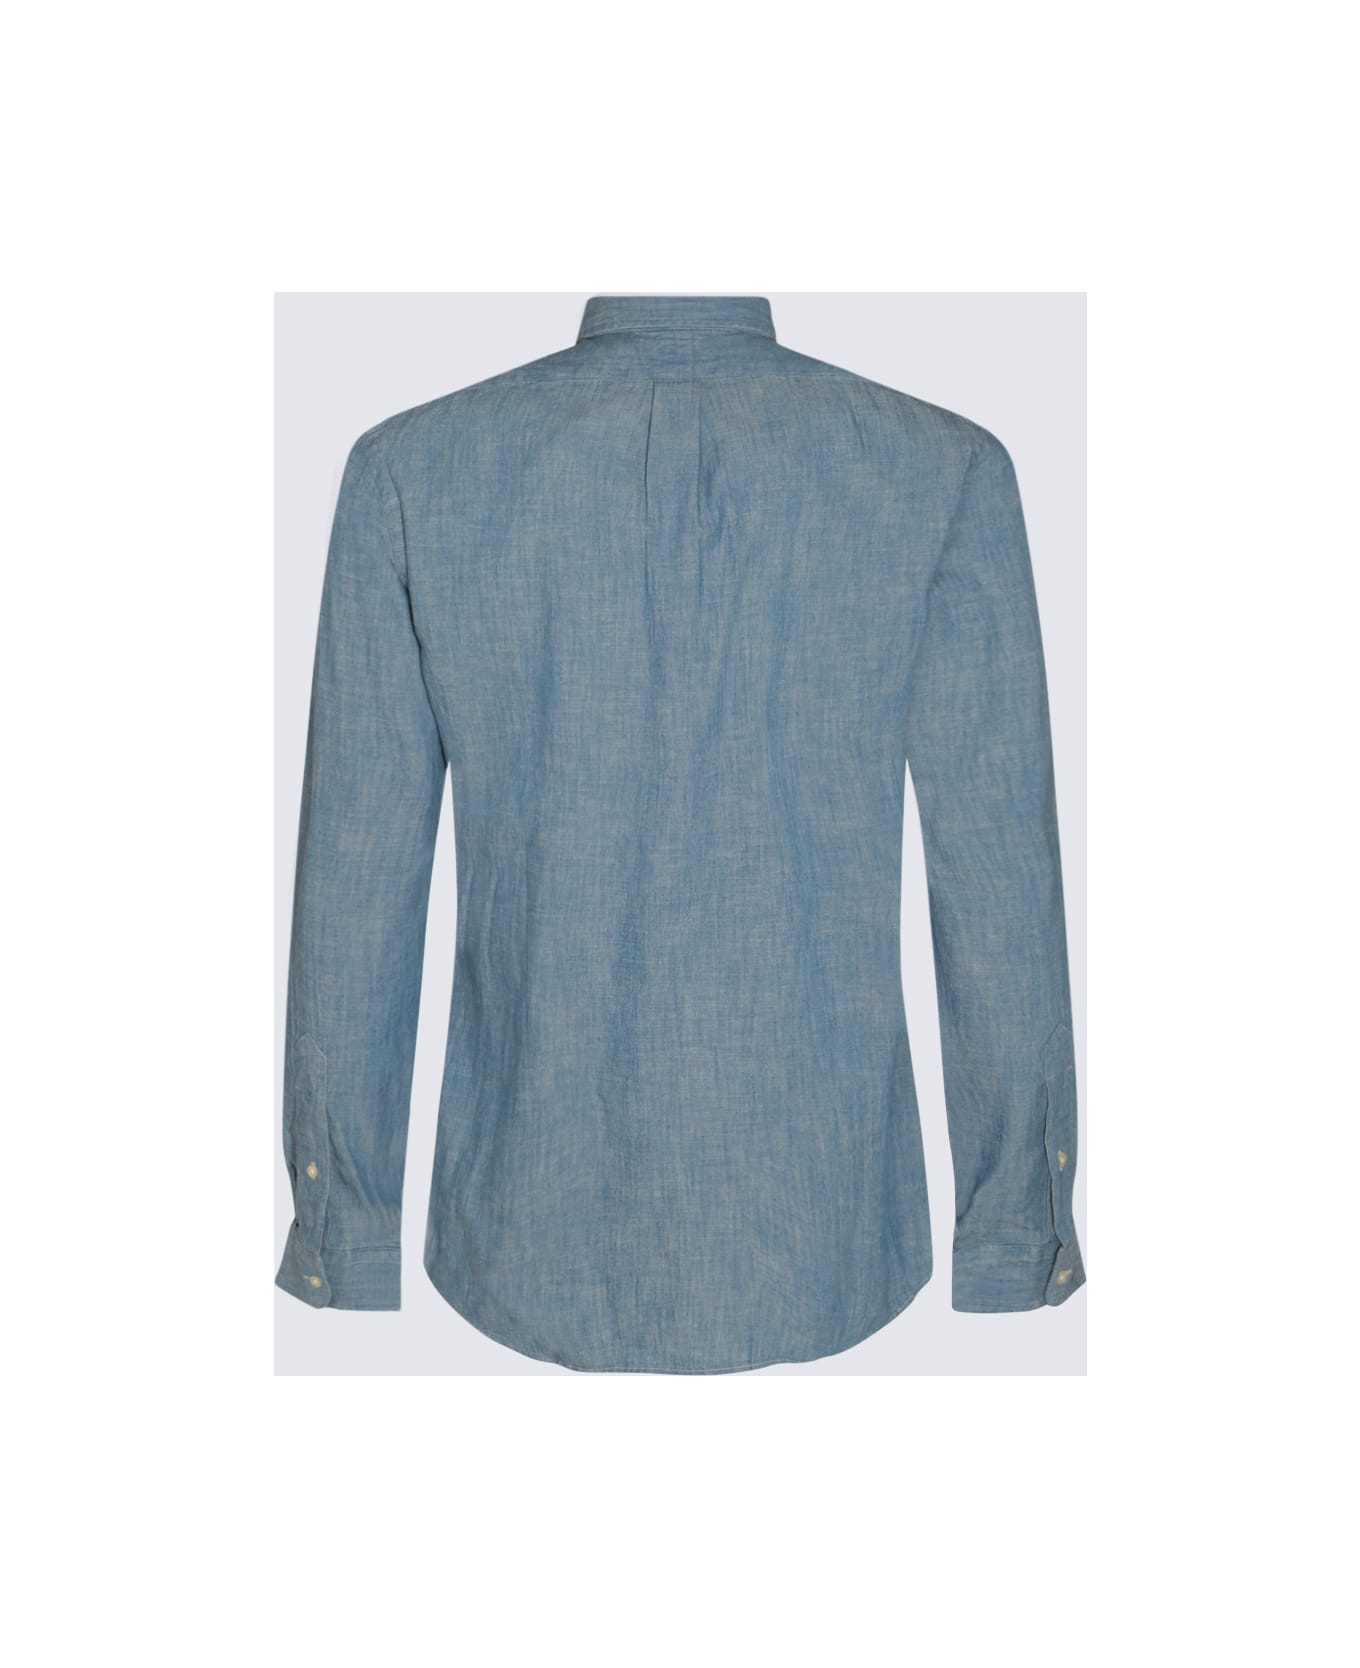 Polo Ralph Lauren Blue Denim Cotton Shirt - CHAMBRAY